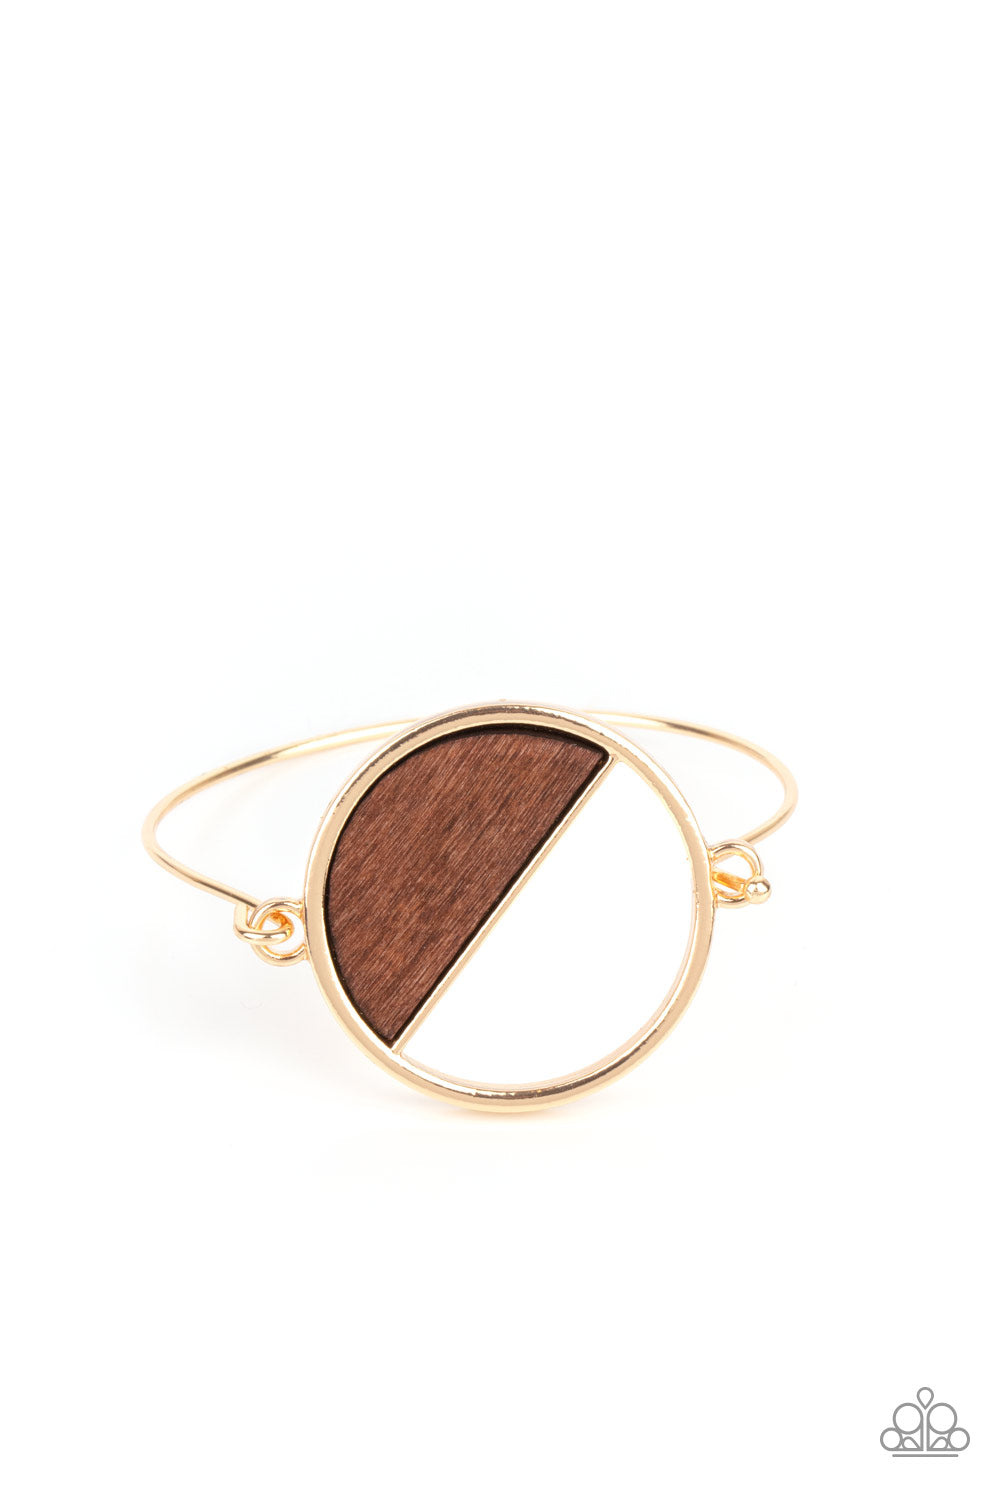 Timber Trade - Gold/Brown bracelet